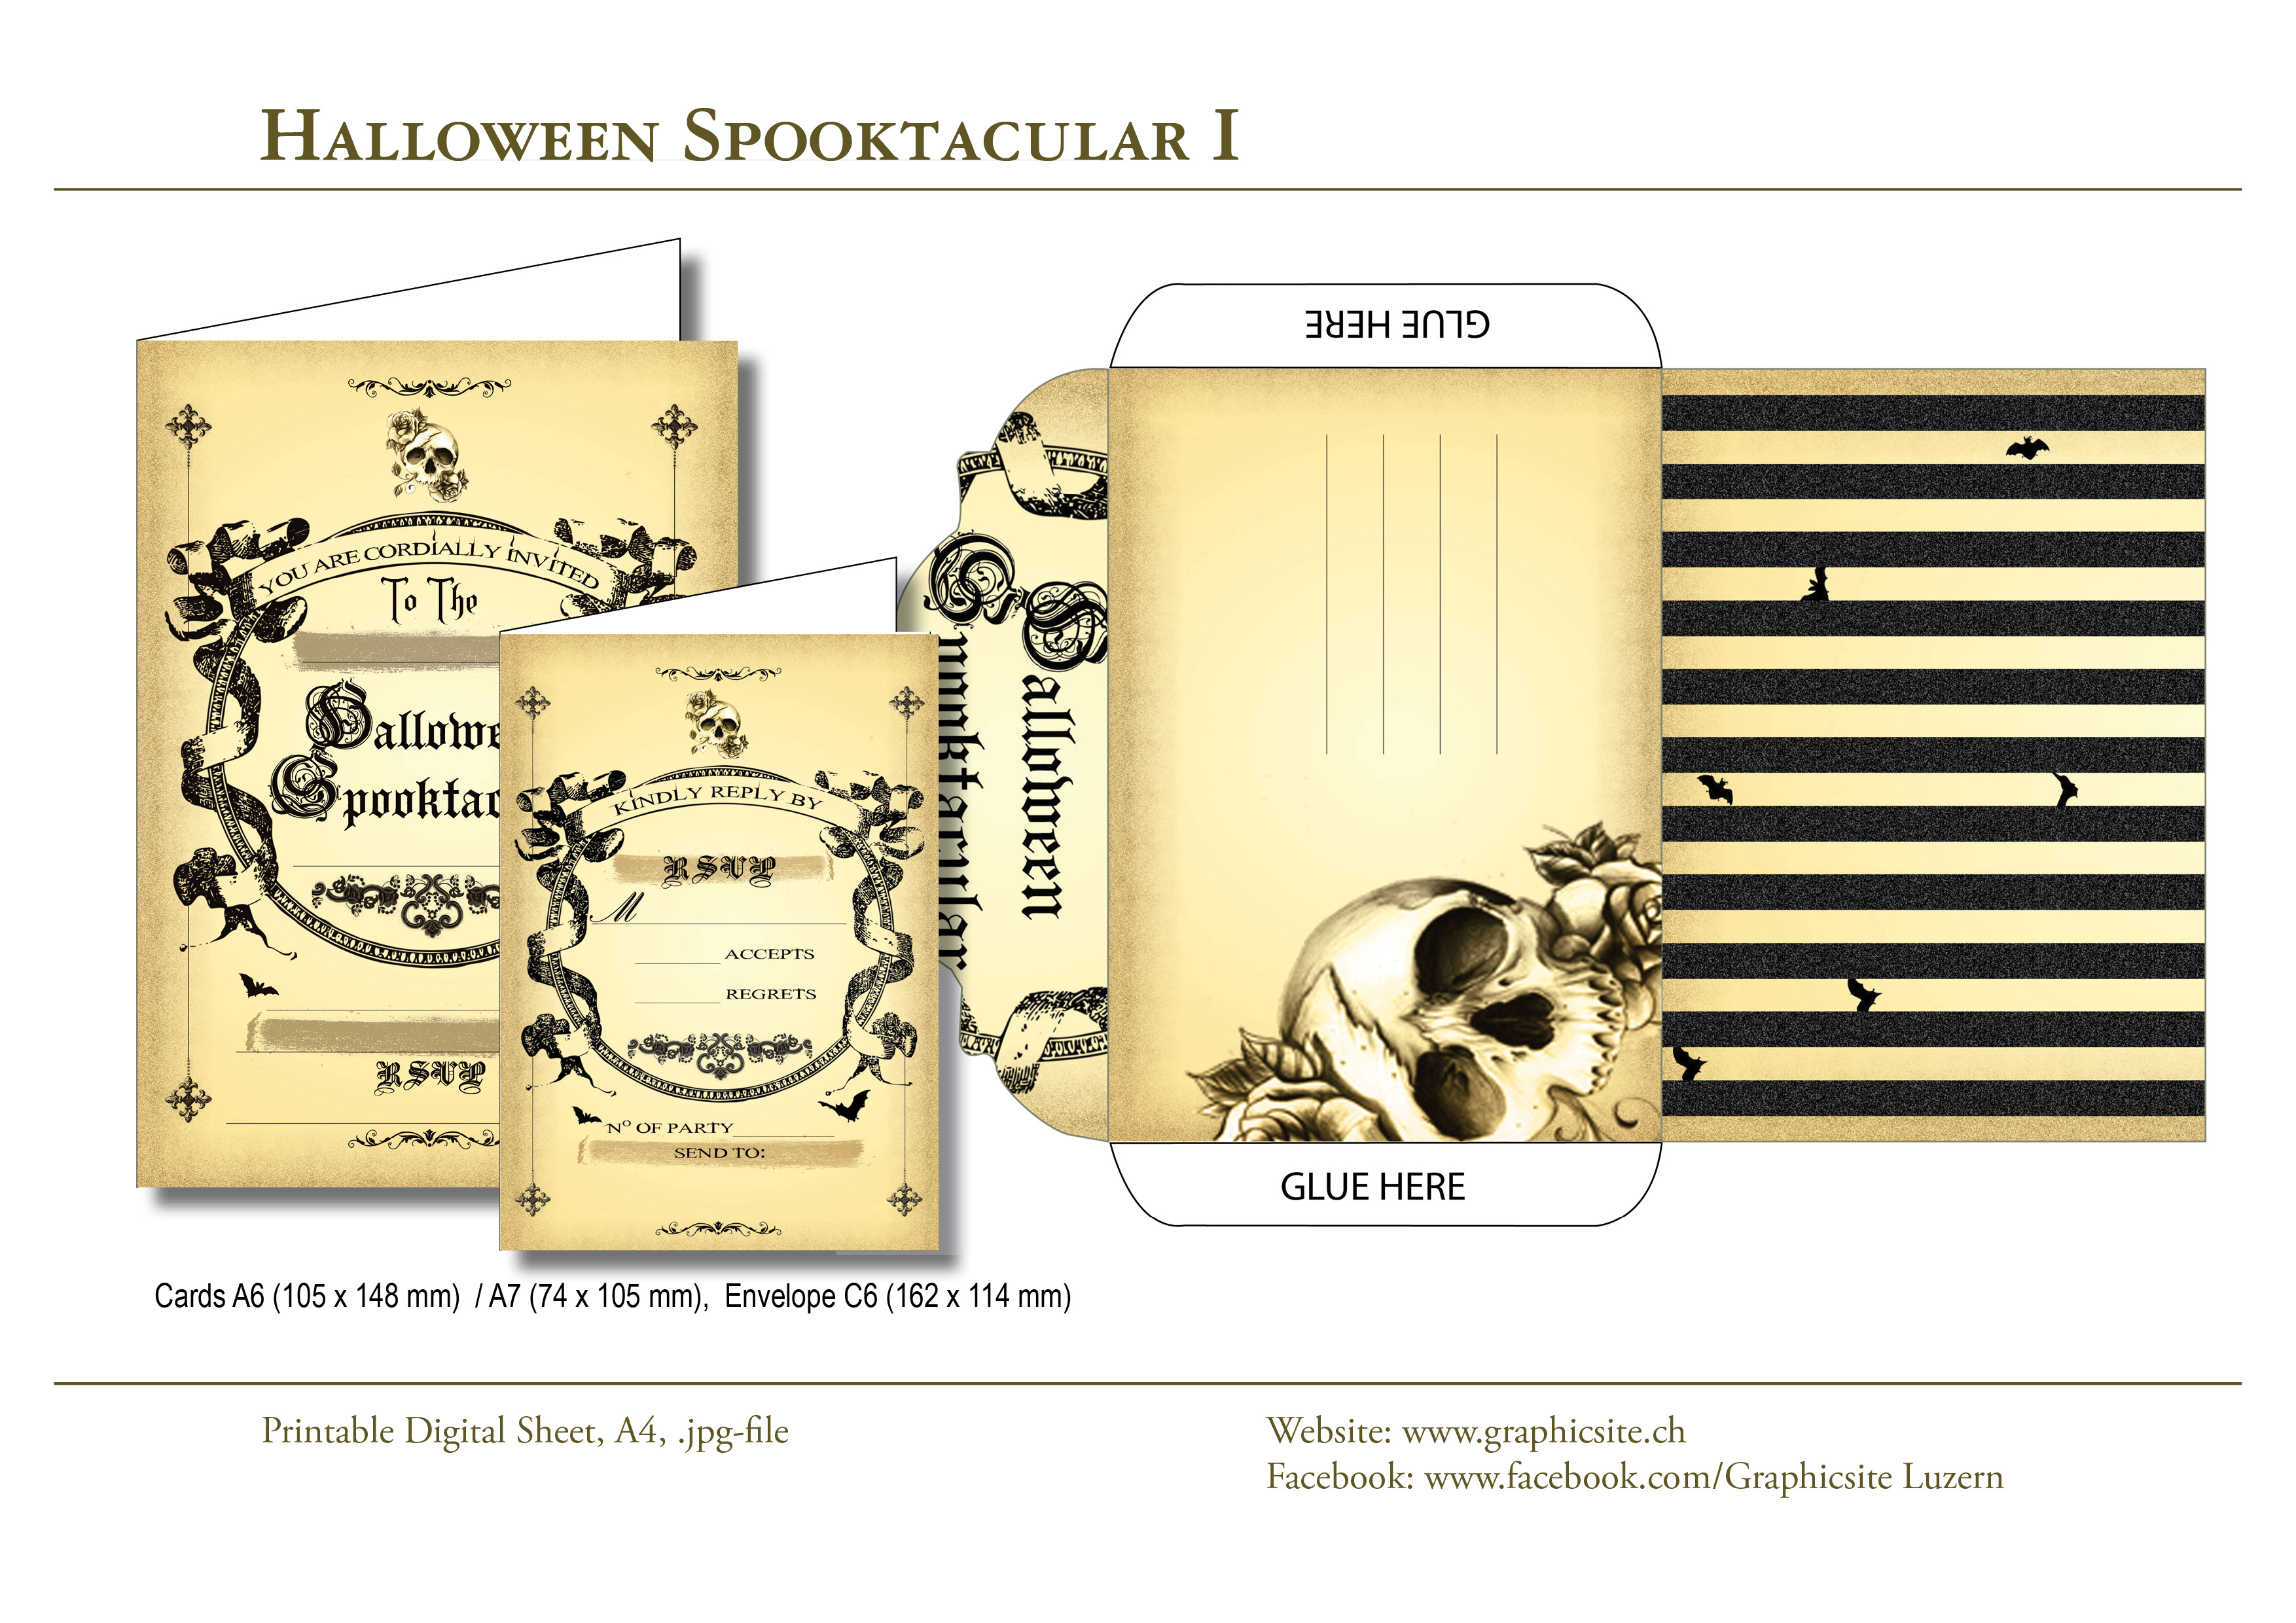 Printable Digital Sheets - DIN A-Formats - Halloween 1